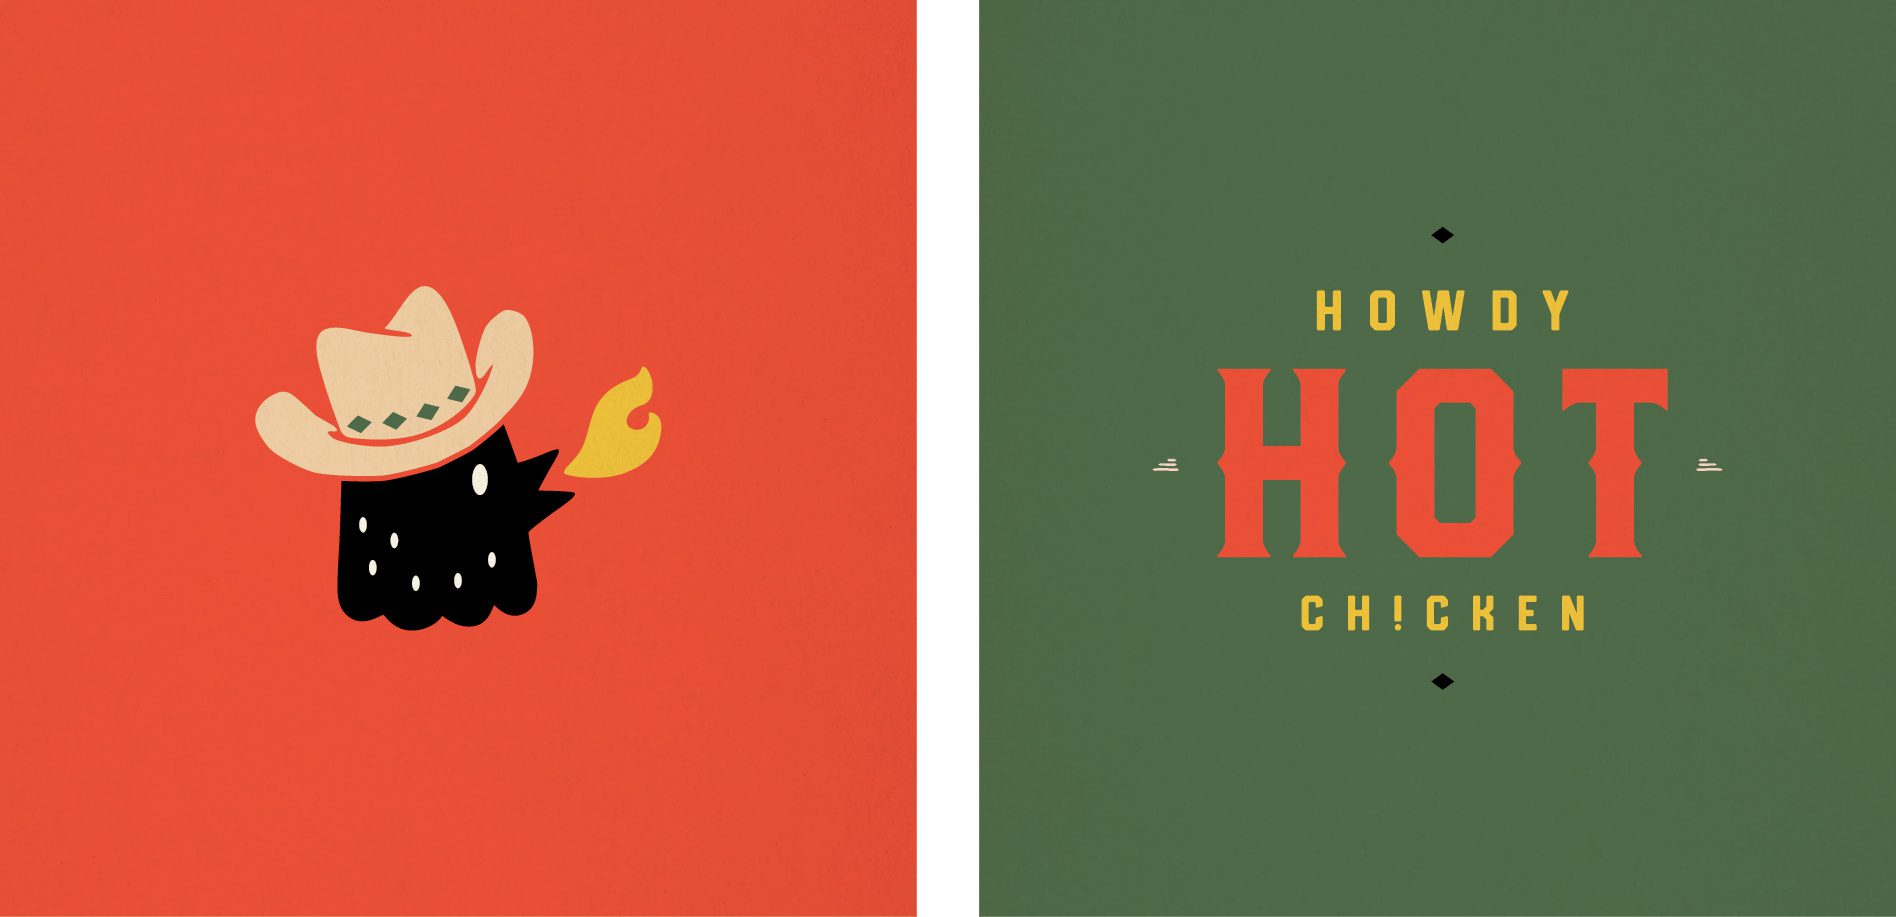 Hot Chicken Restaurant Branding